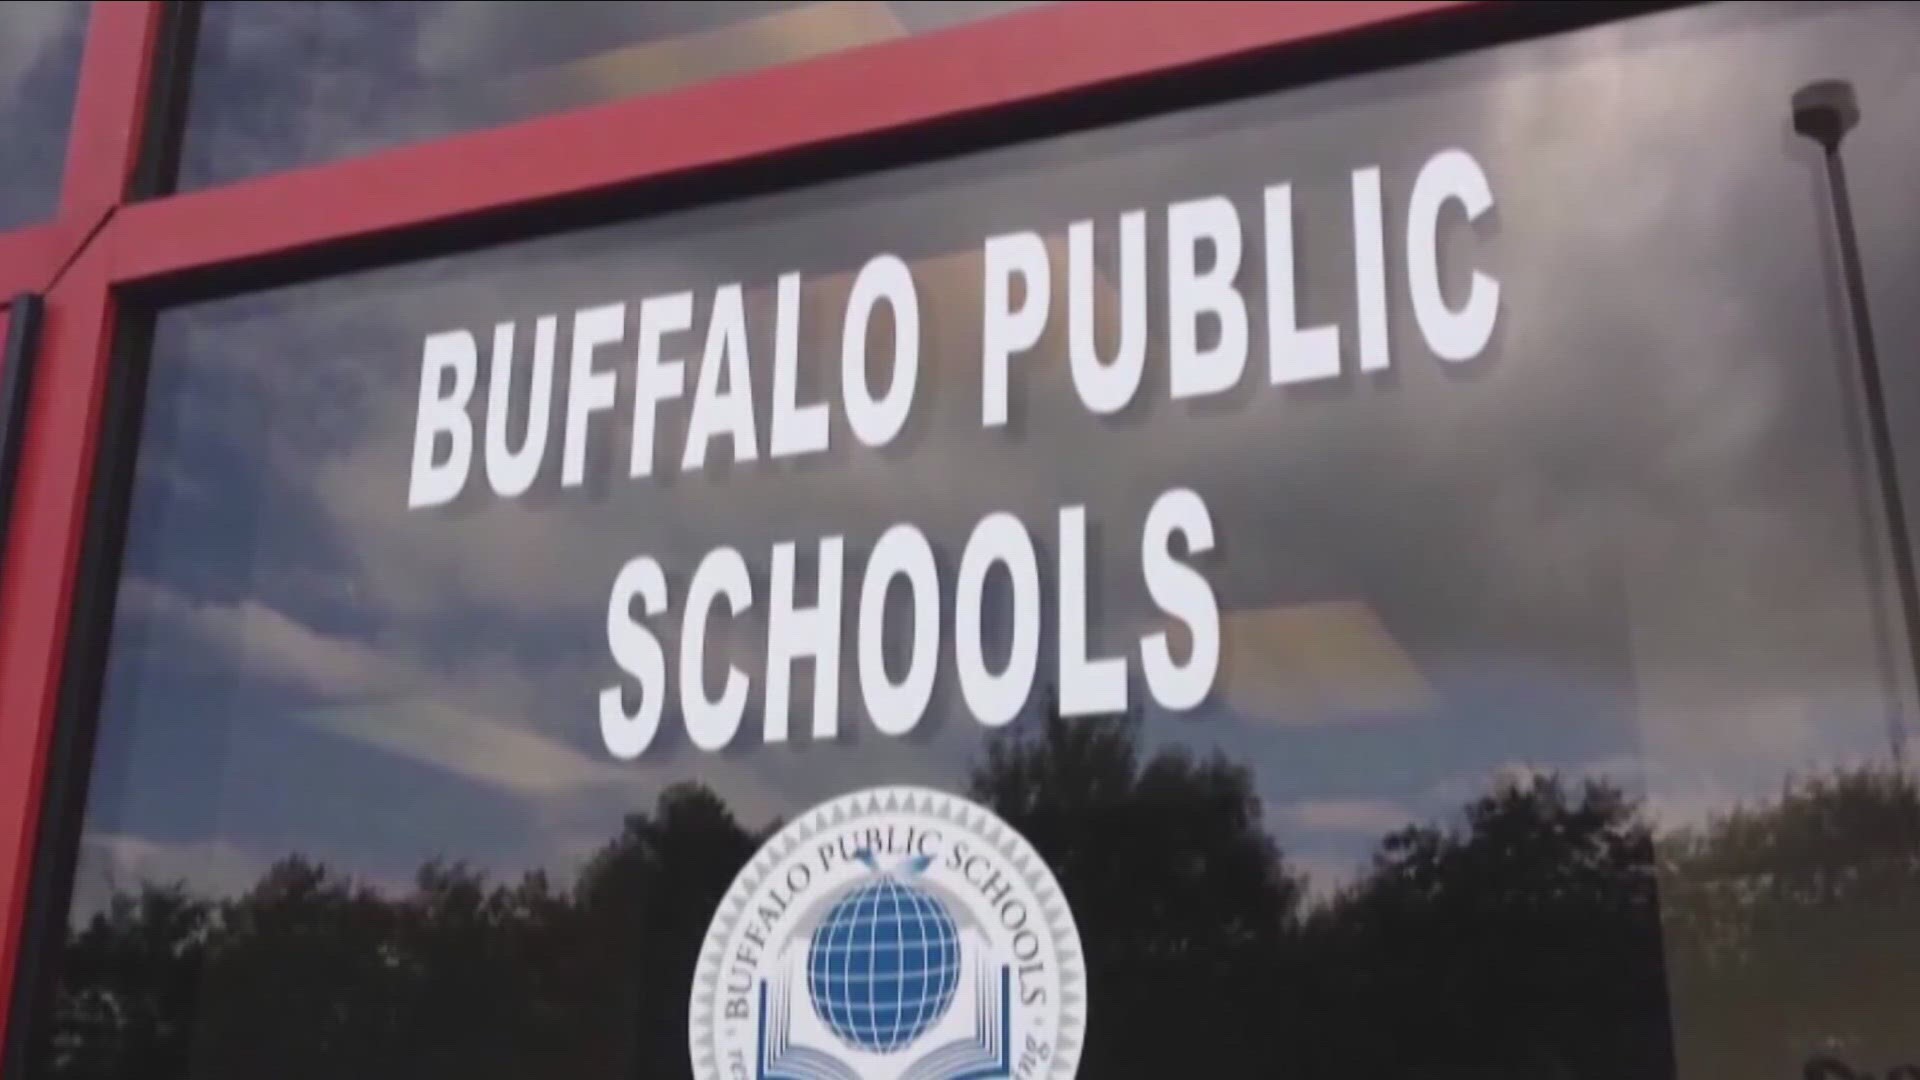 Buffalo Teachers federation overwhelmingly approve new teachers contract